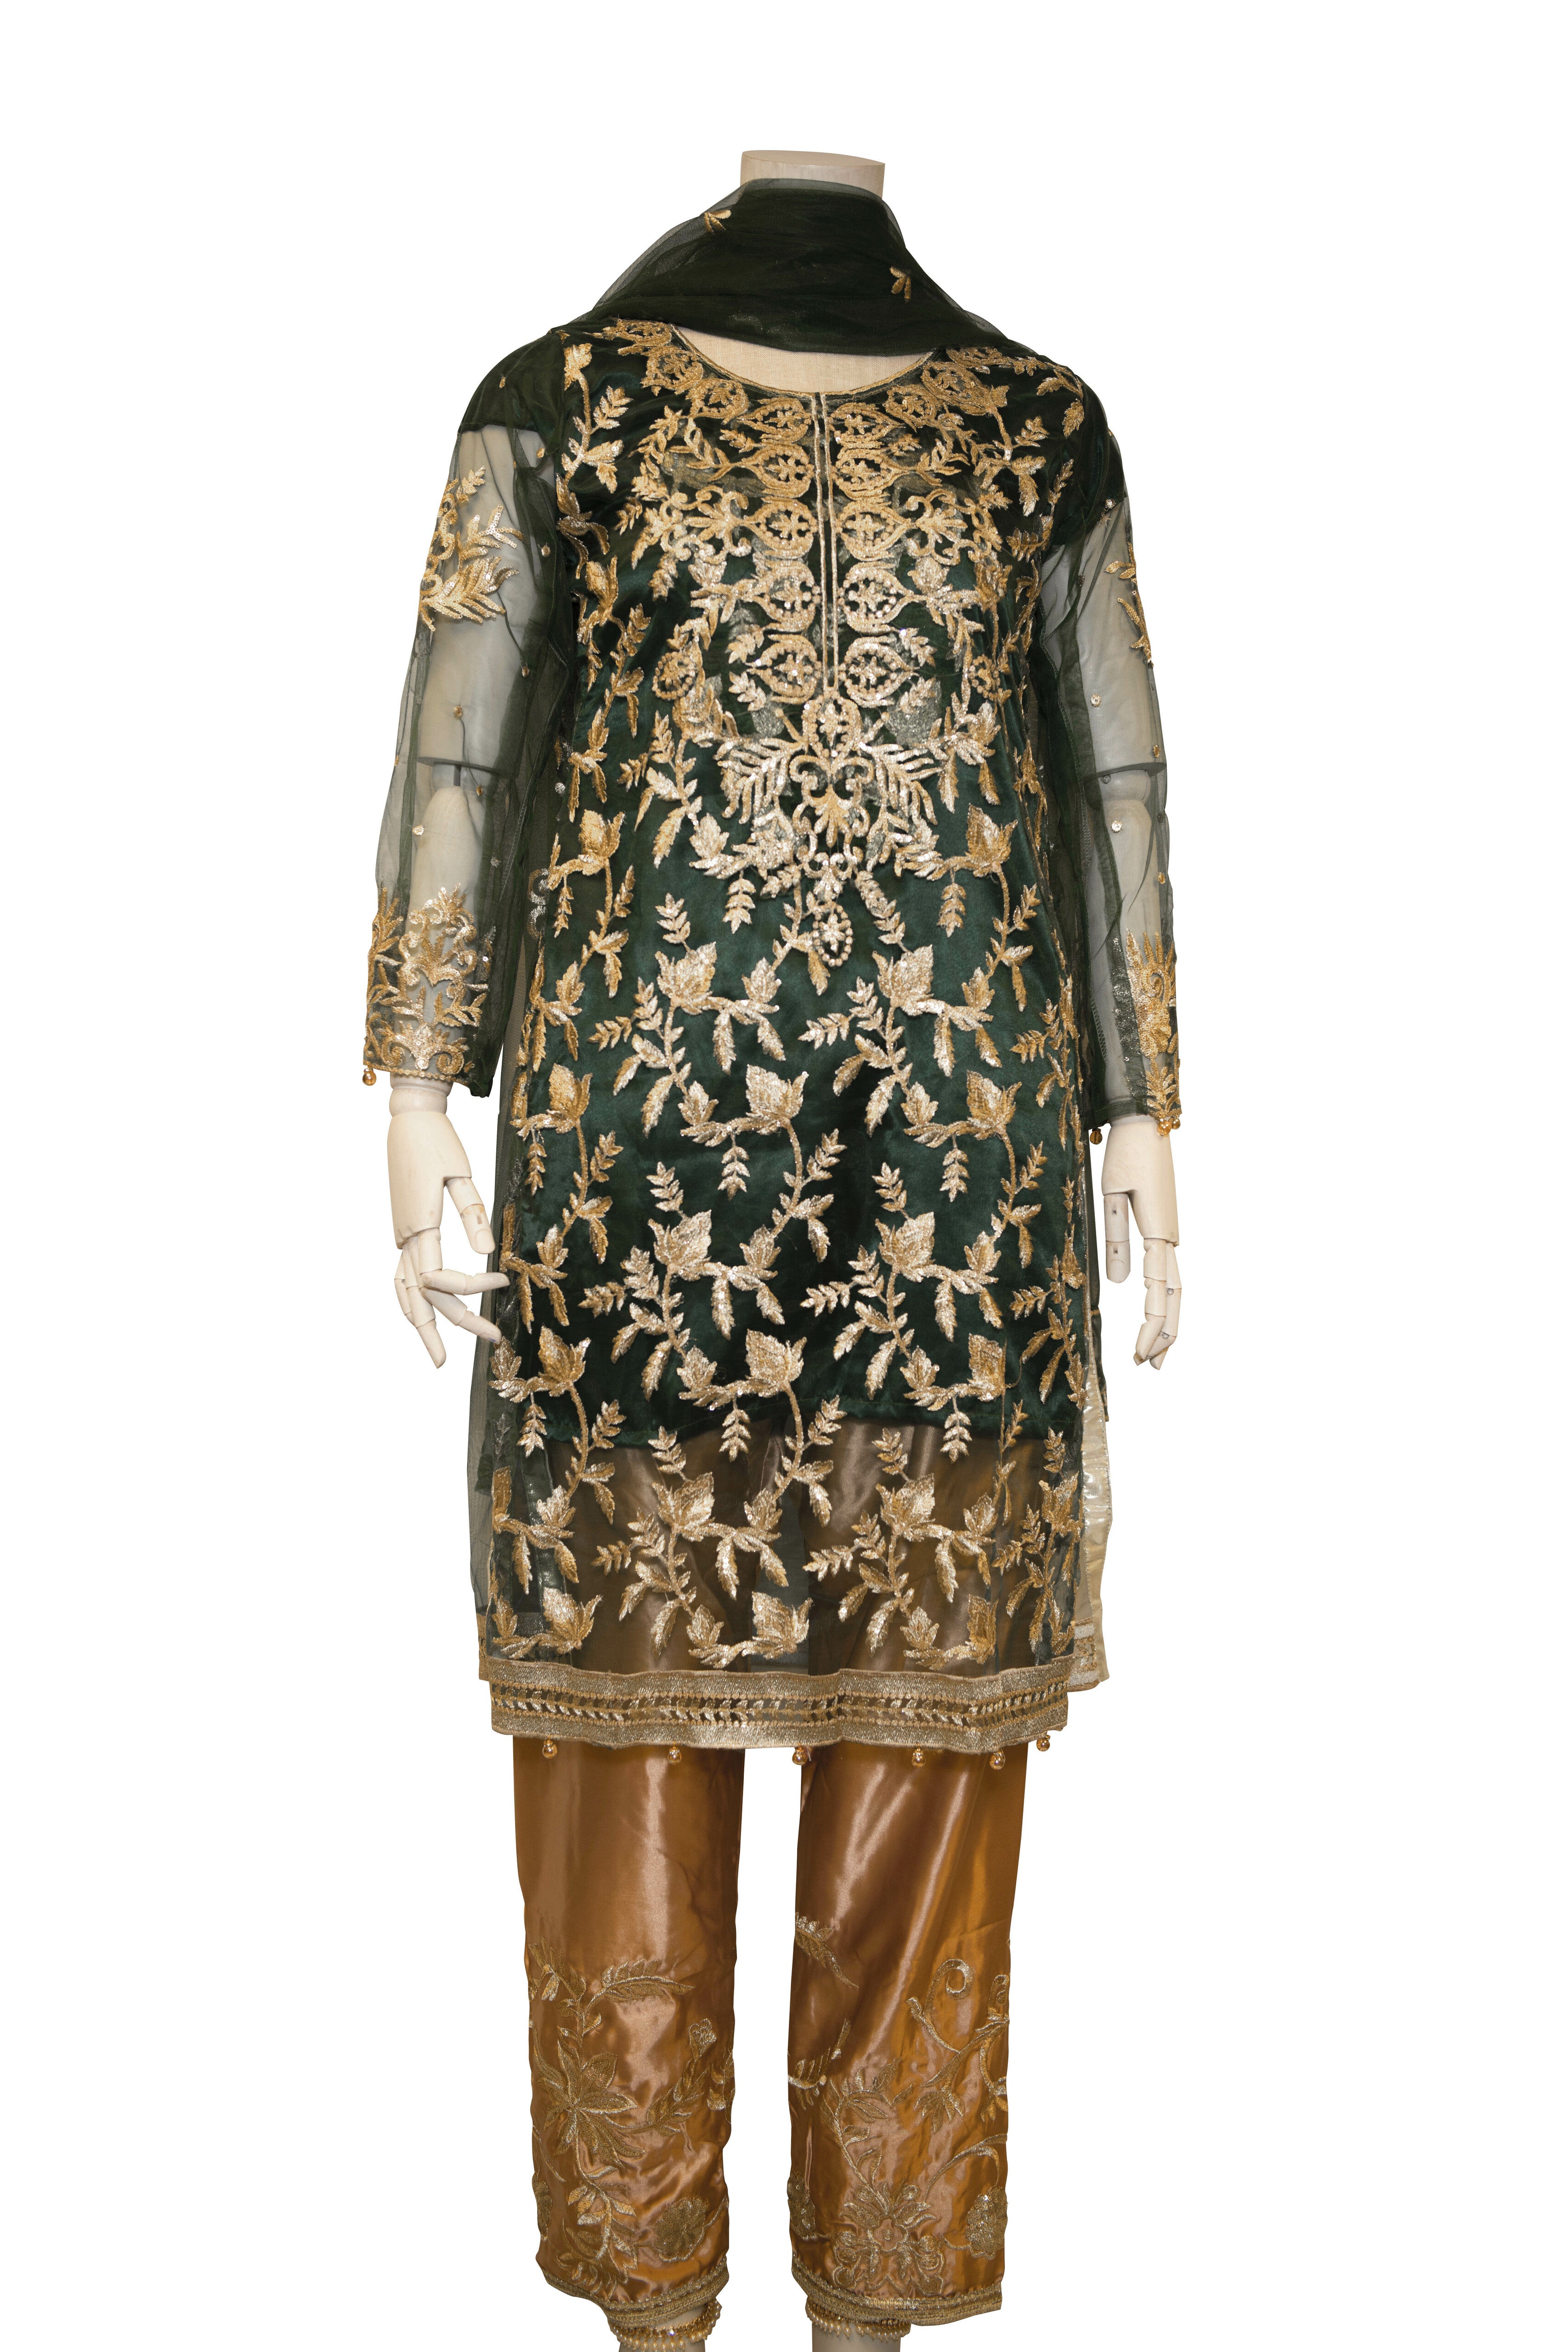 Embroidery Work Pakistani Designer Suit